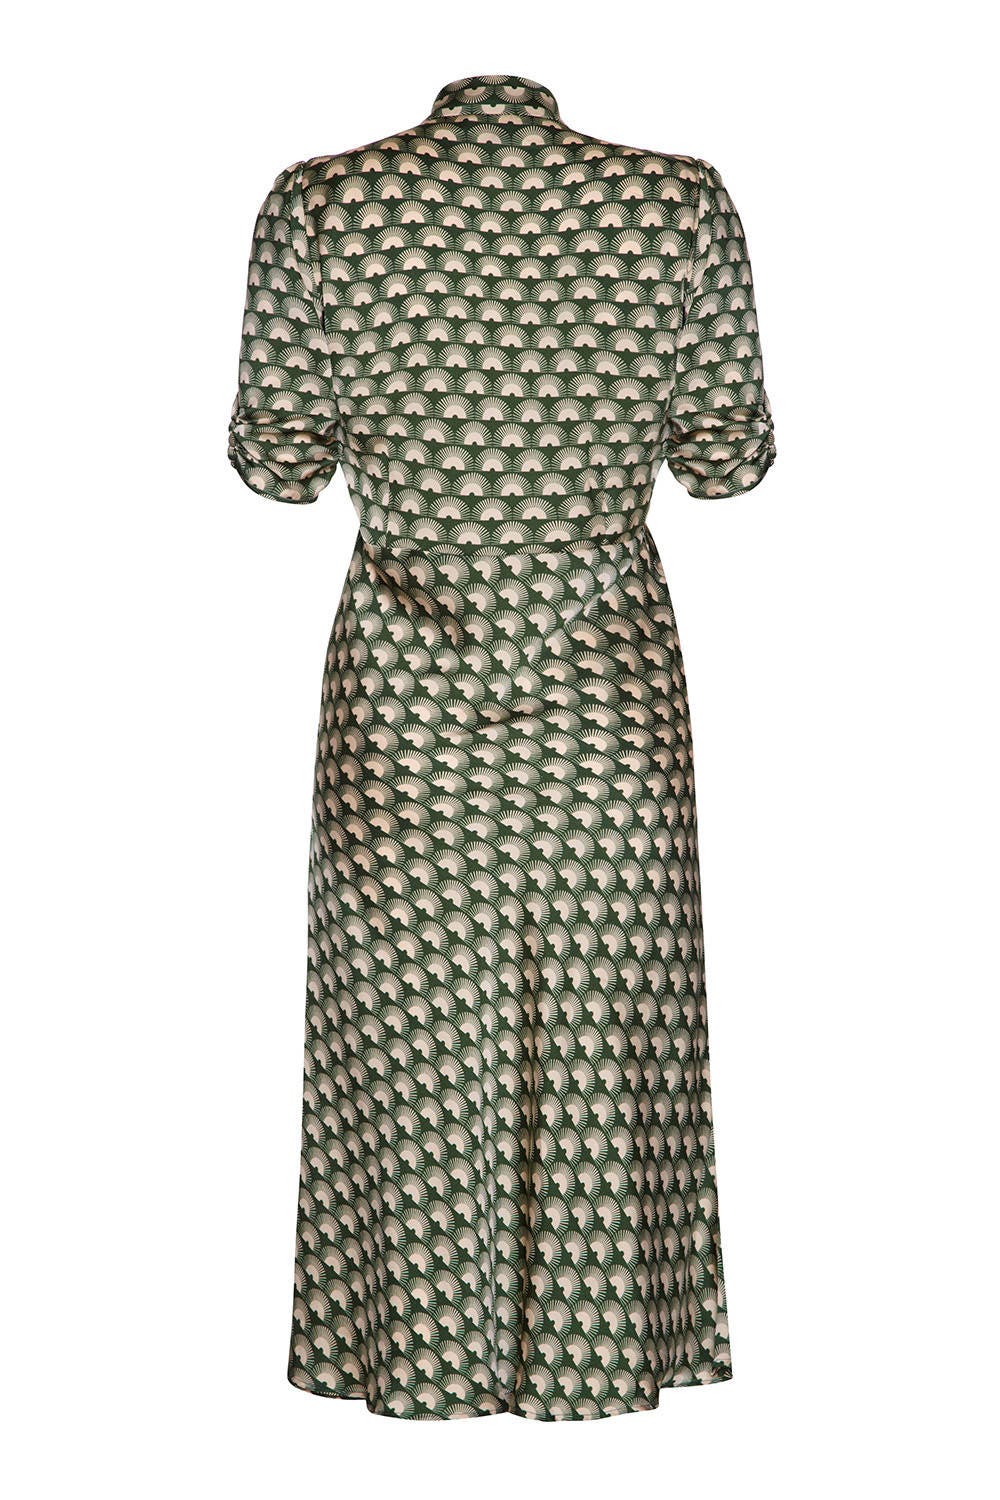 1940s Style Midi Dress in Retro Malachite Green Fan Print - Etsy